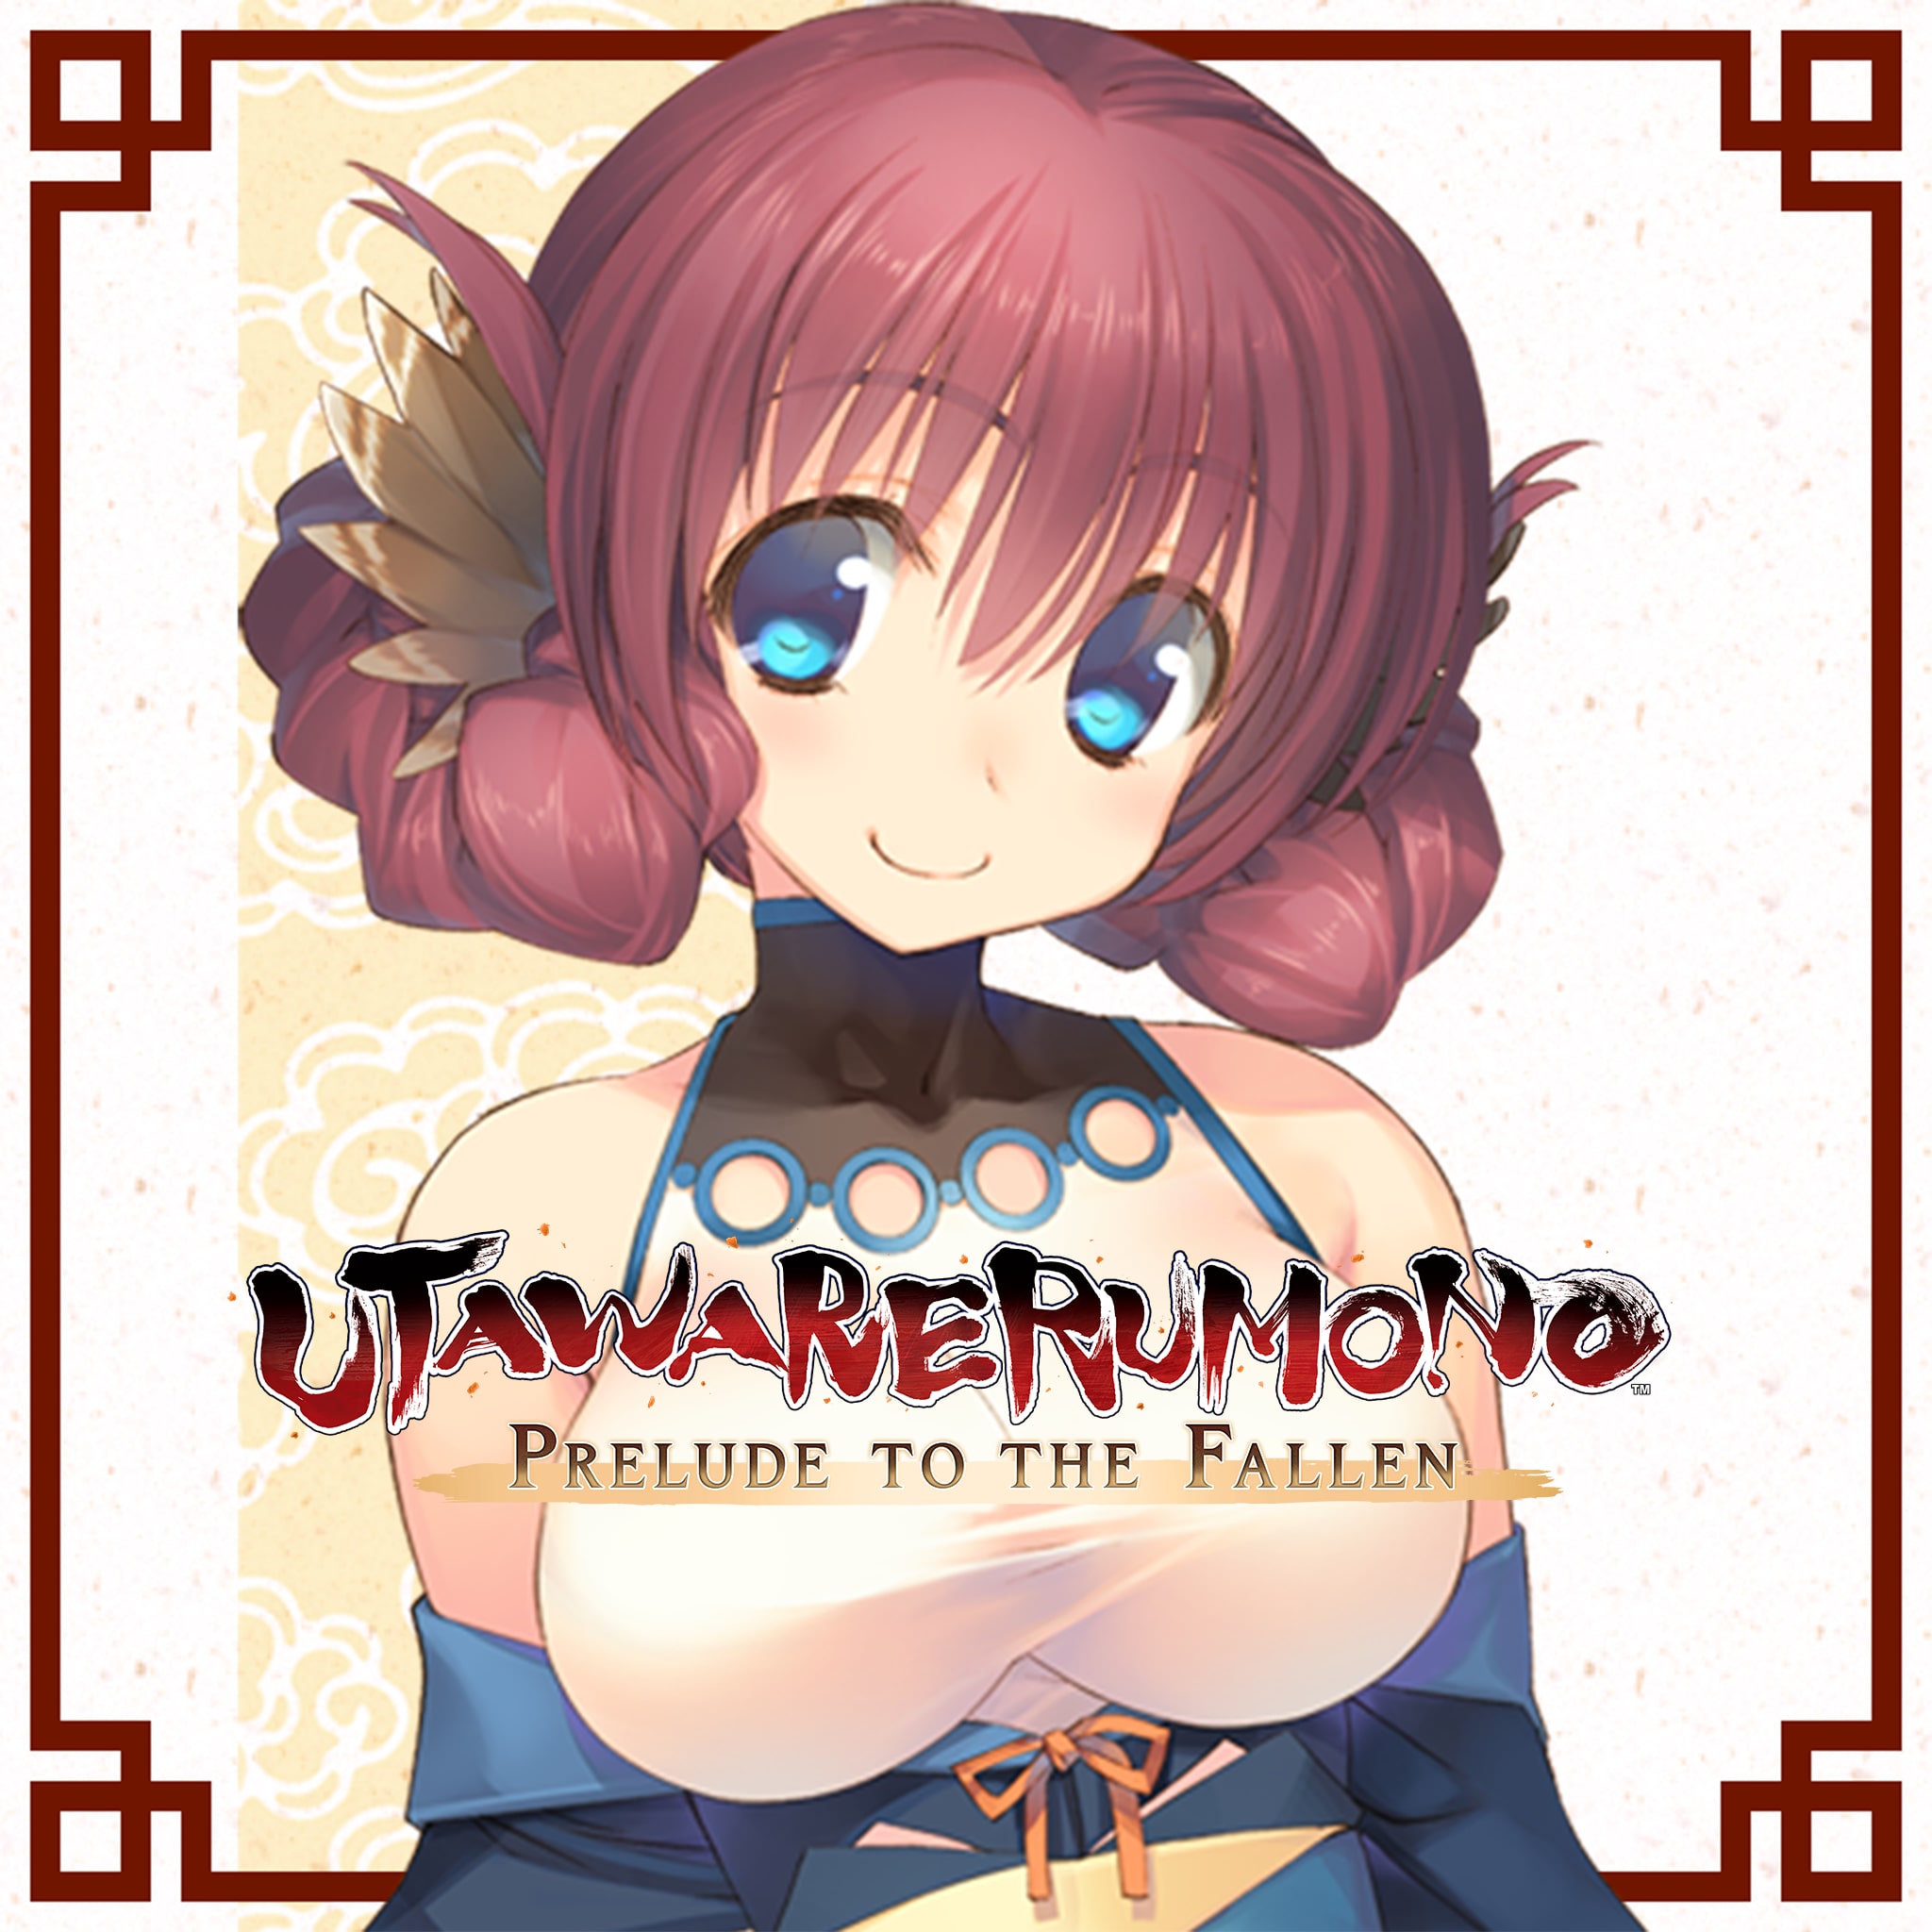 Utawarerumono: Prelude to the Fallen - DLC Character: Nosuri